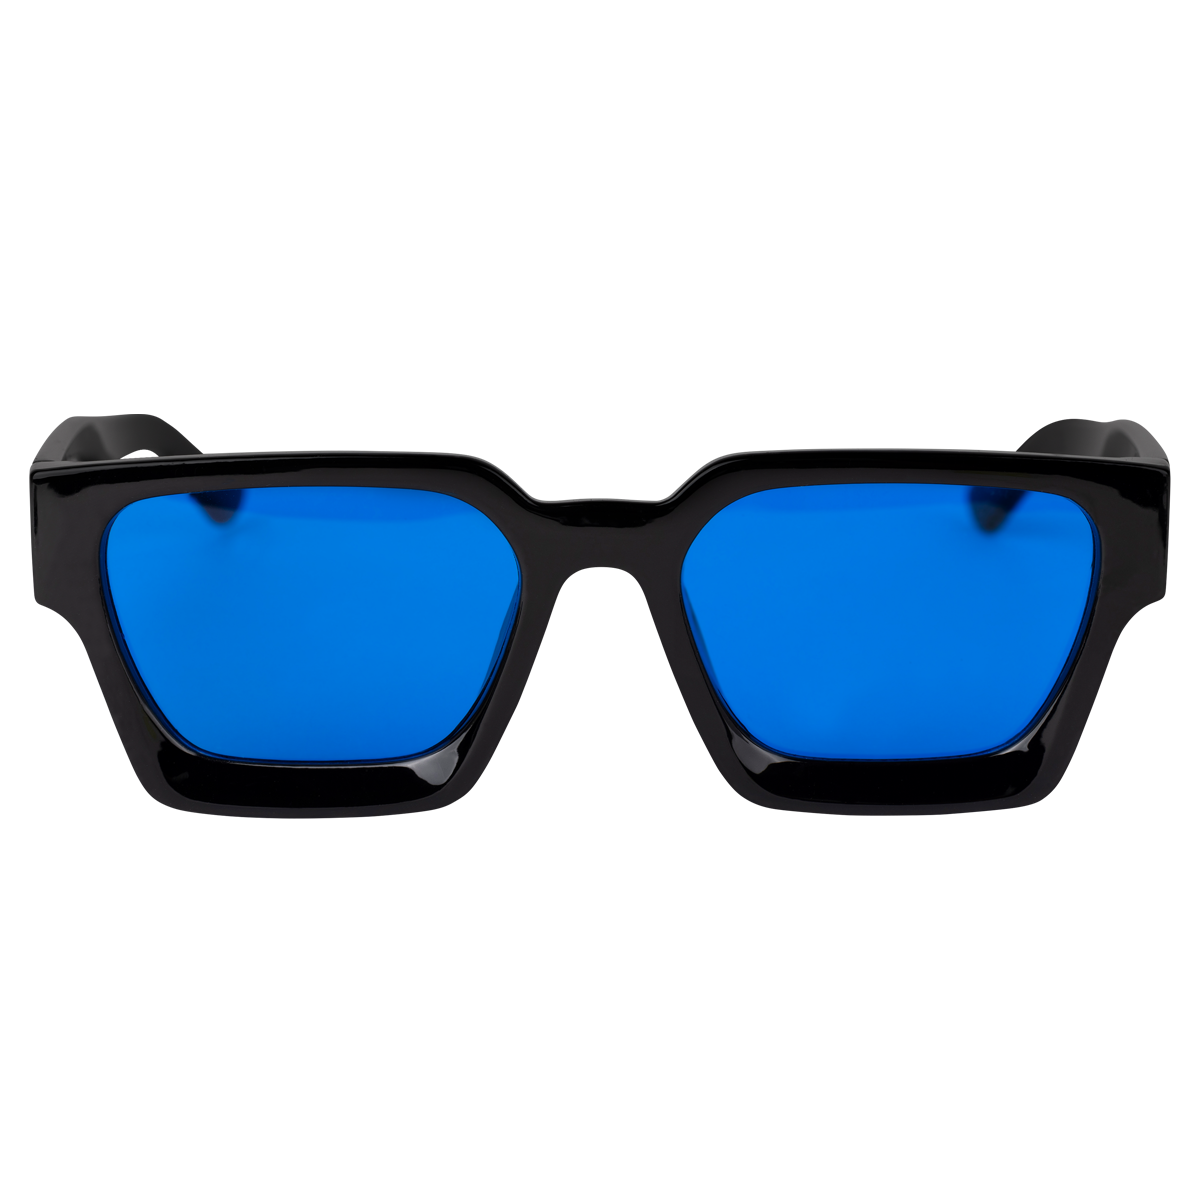 Optimistics Sunglasses in Black/Blue – Petals and Peacocks